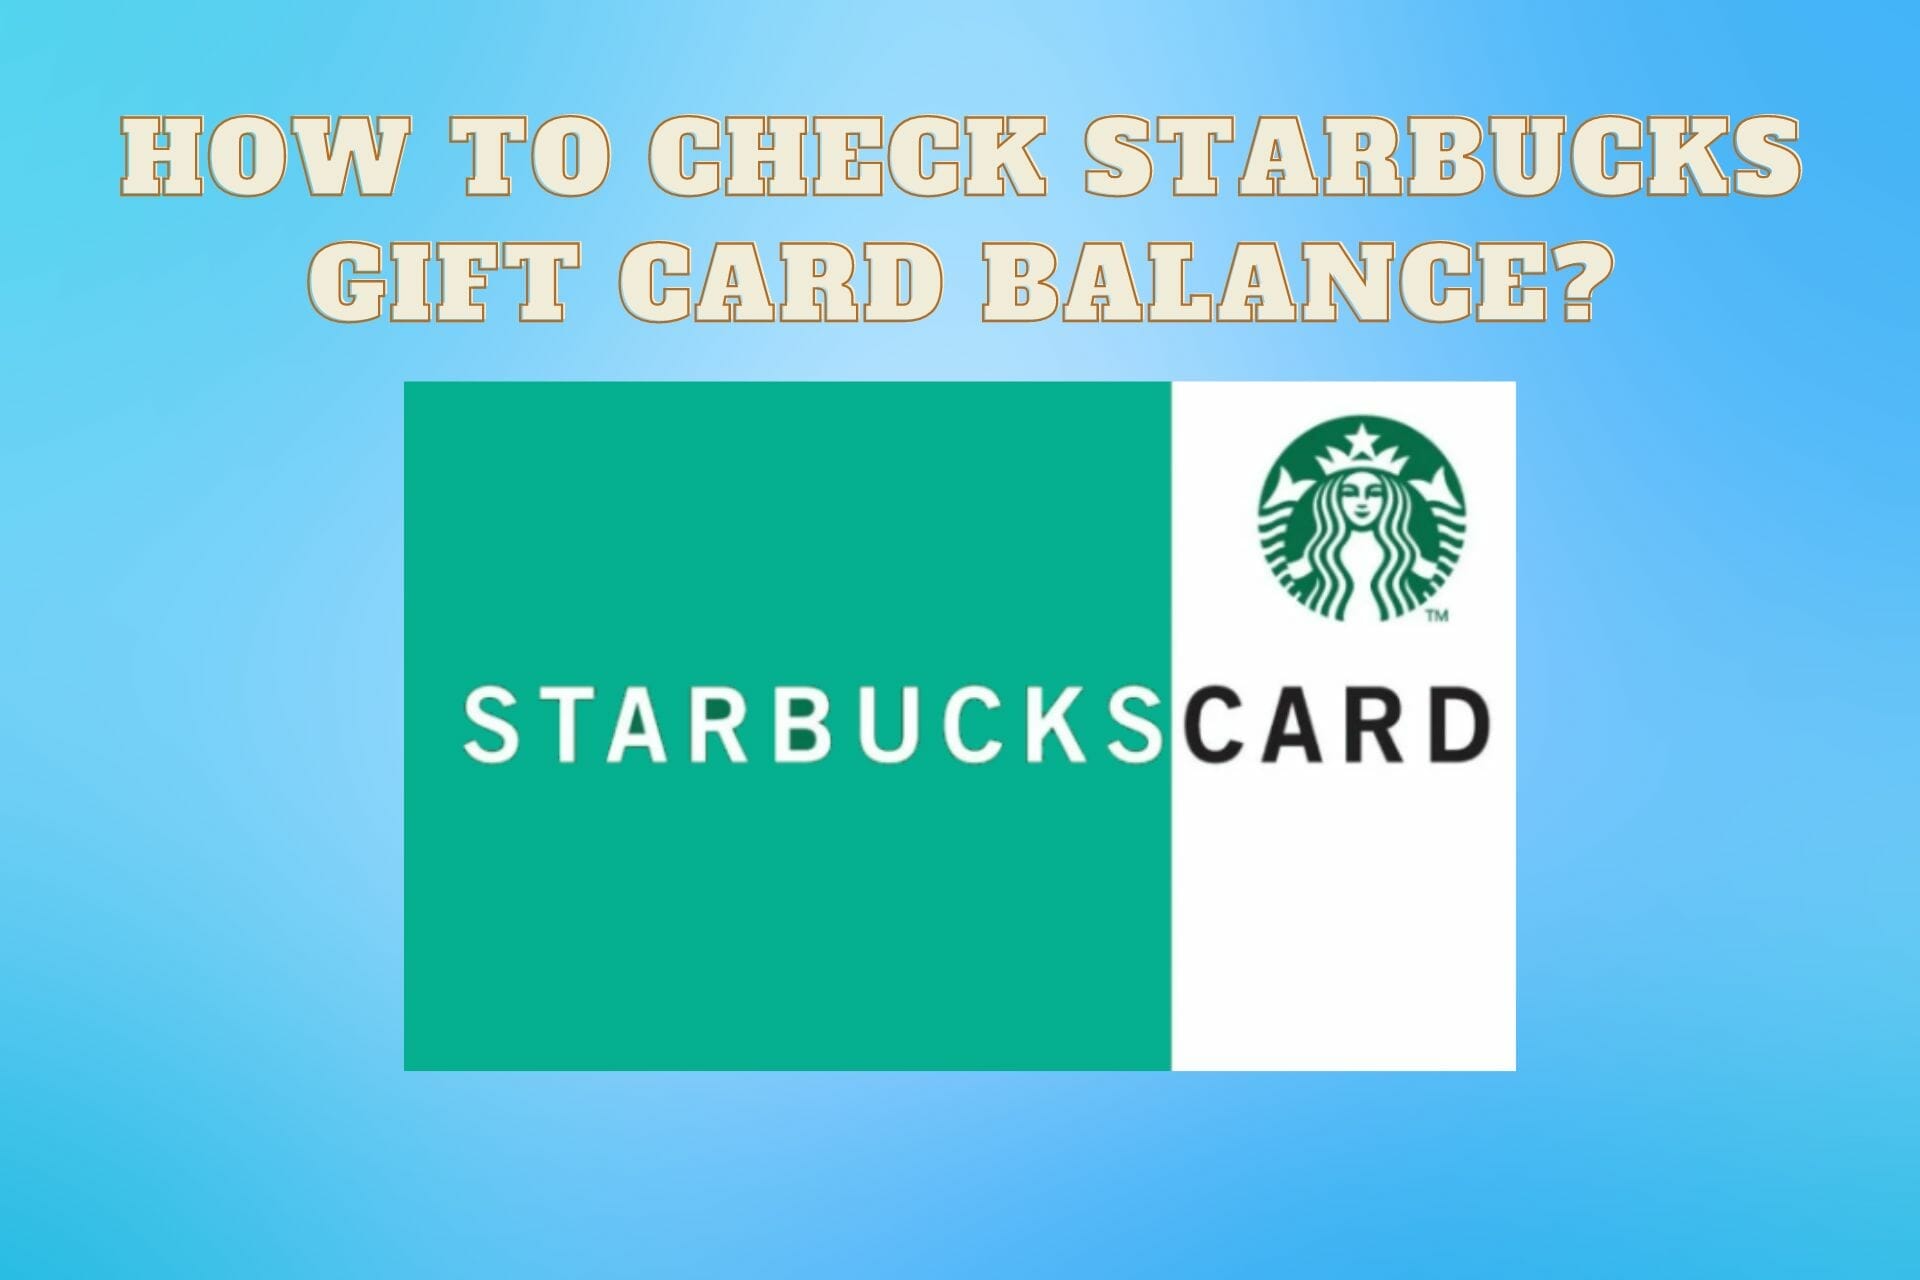 How to check Starbucks gift card balance